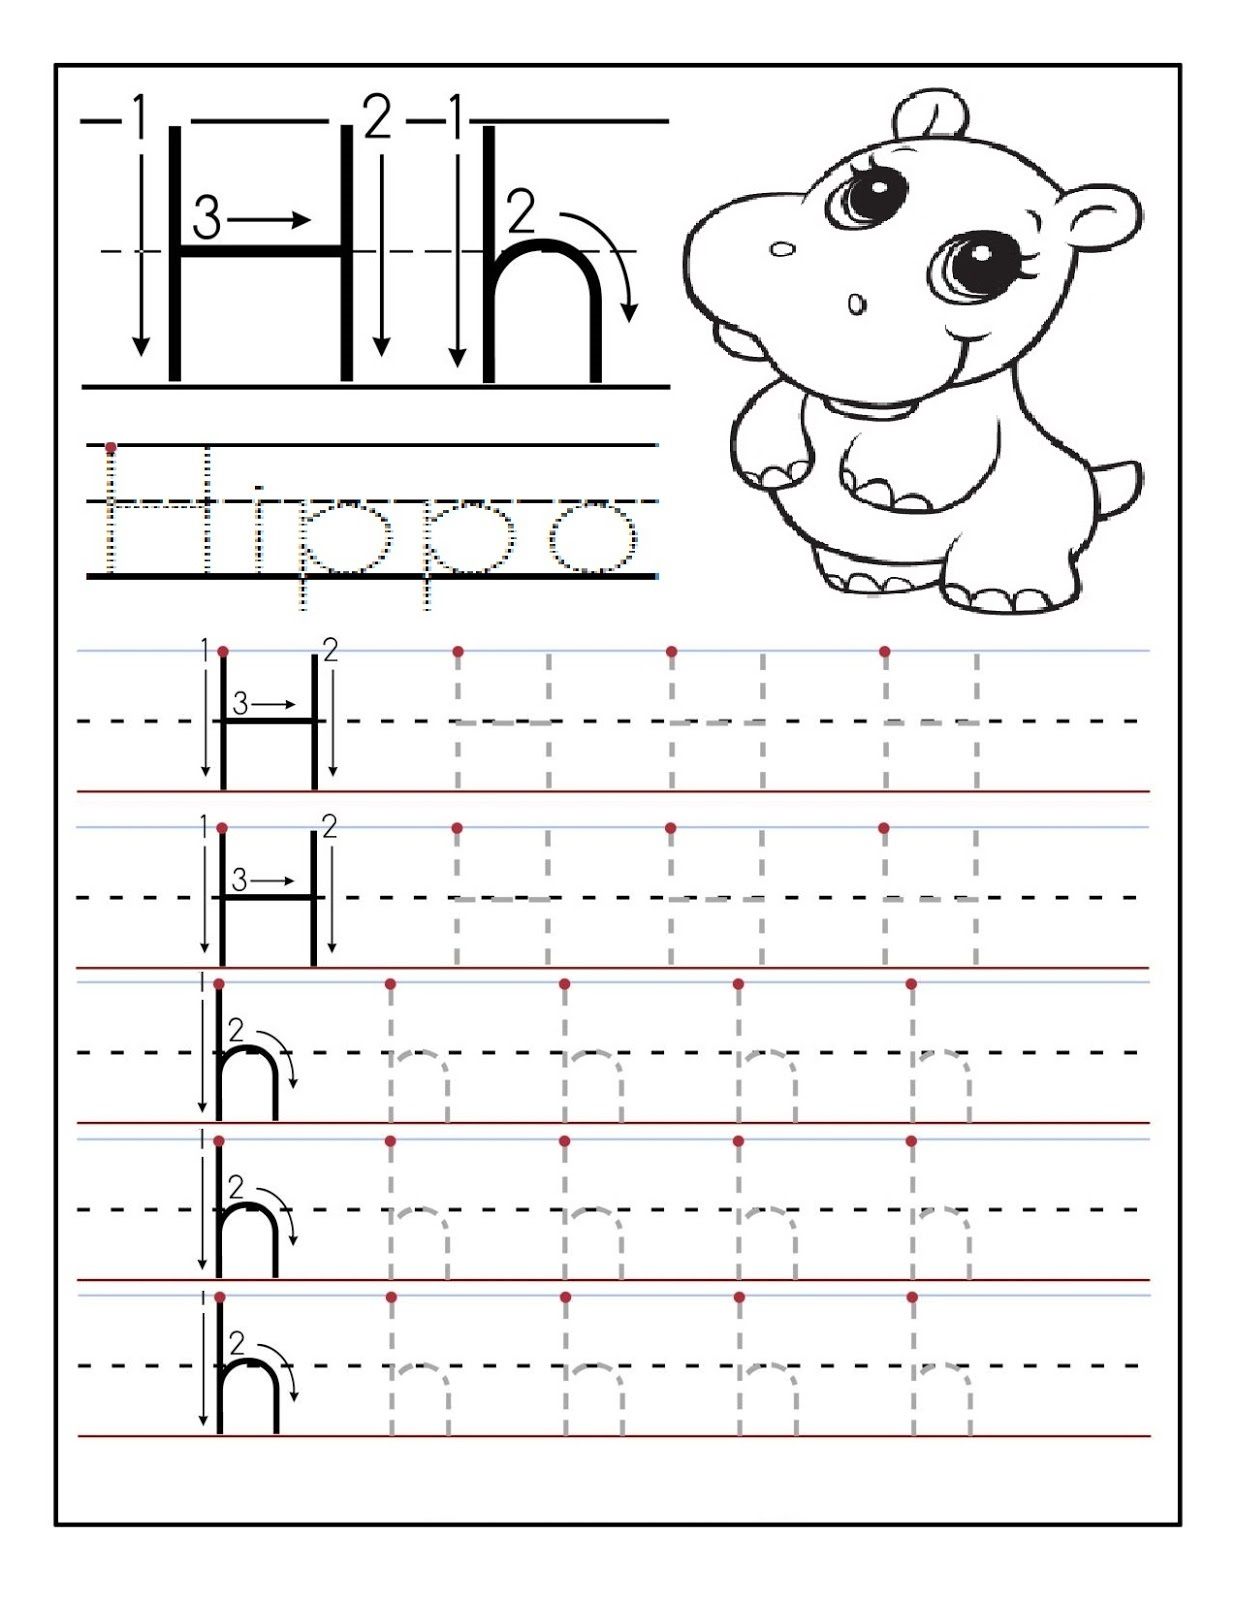 Printable Letter H Tracing Worksheets For Preschoolers